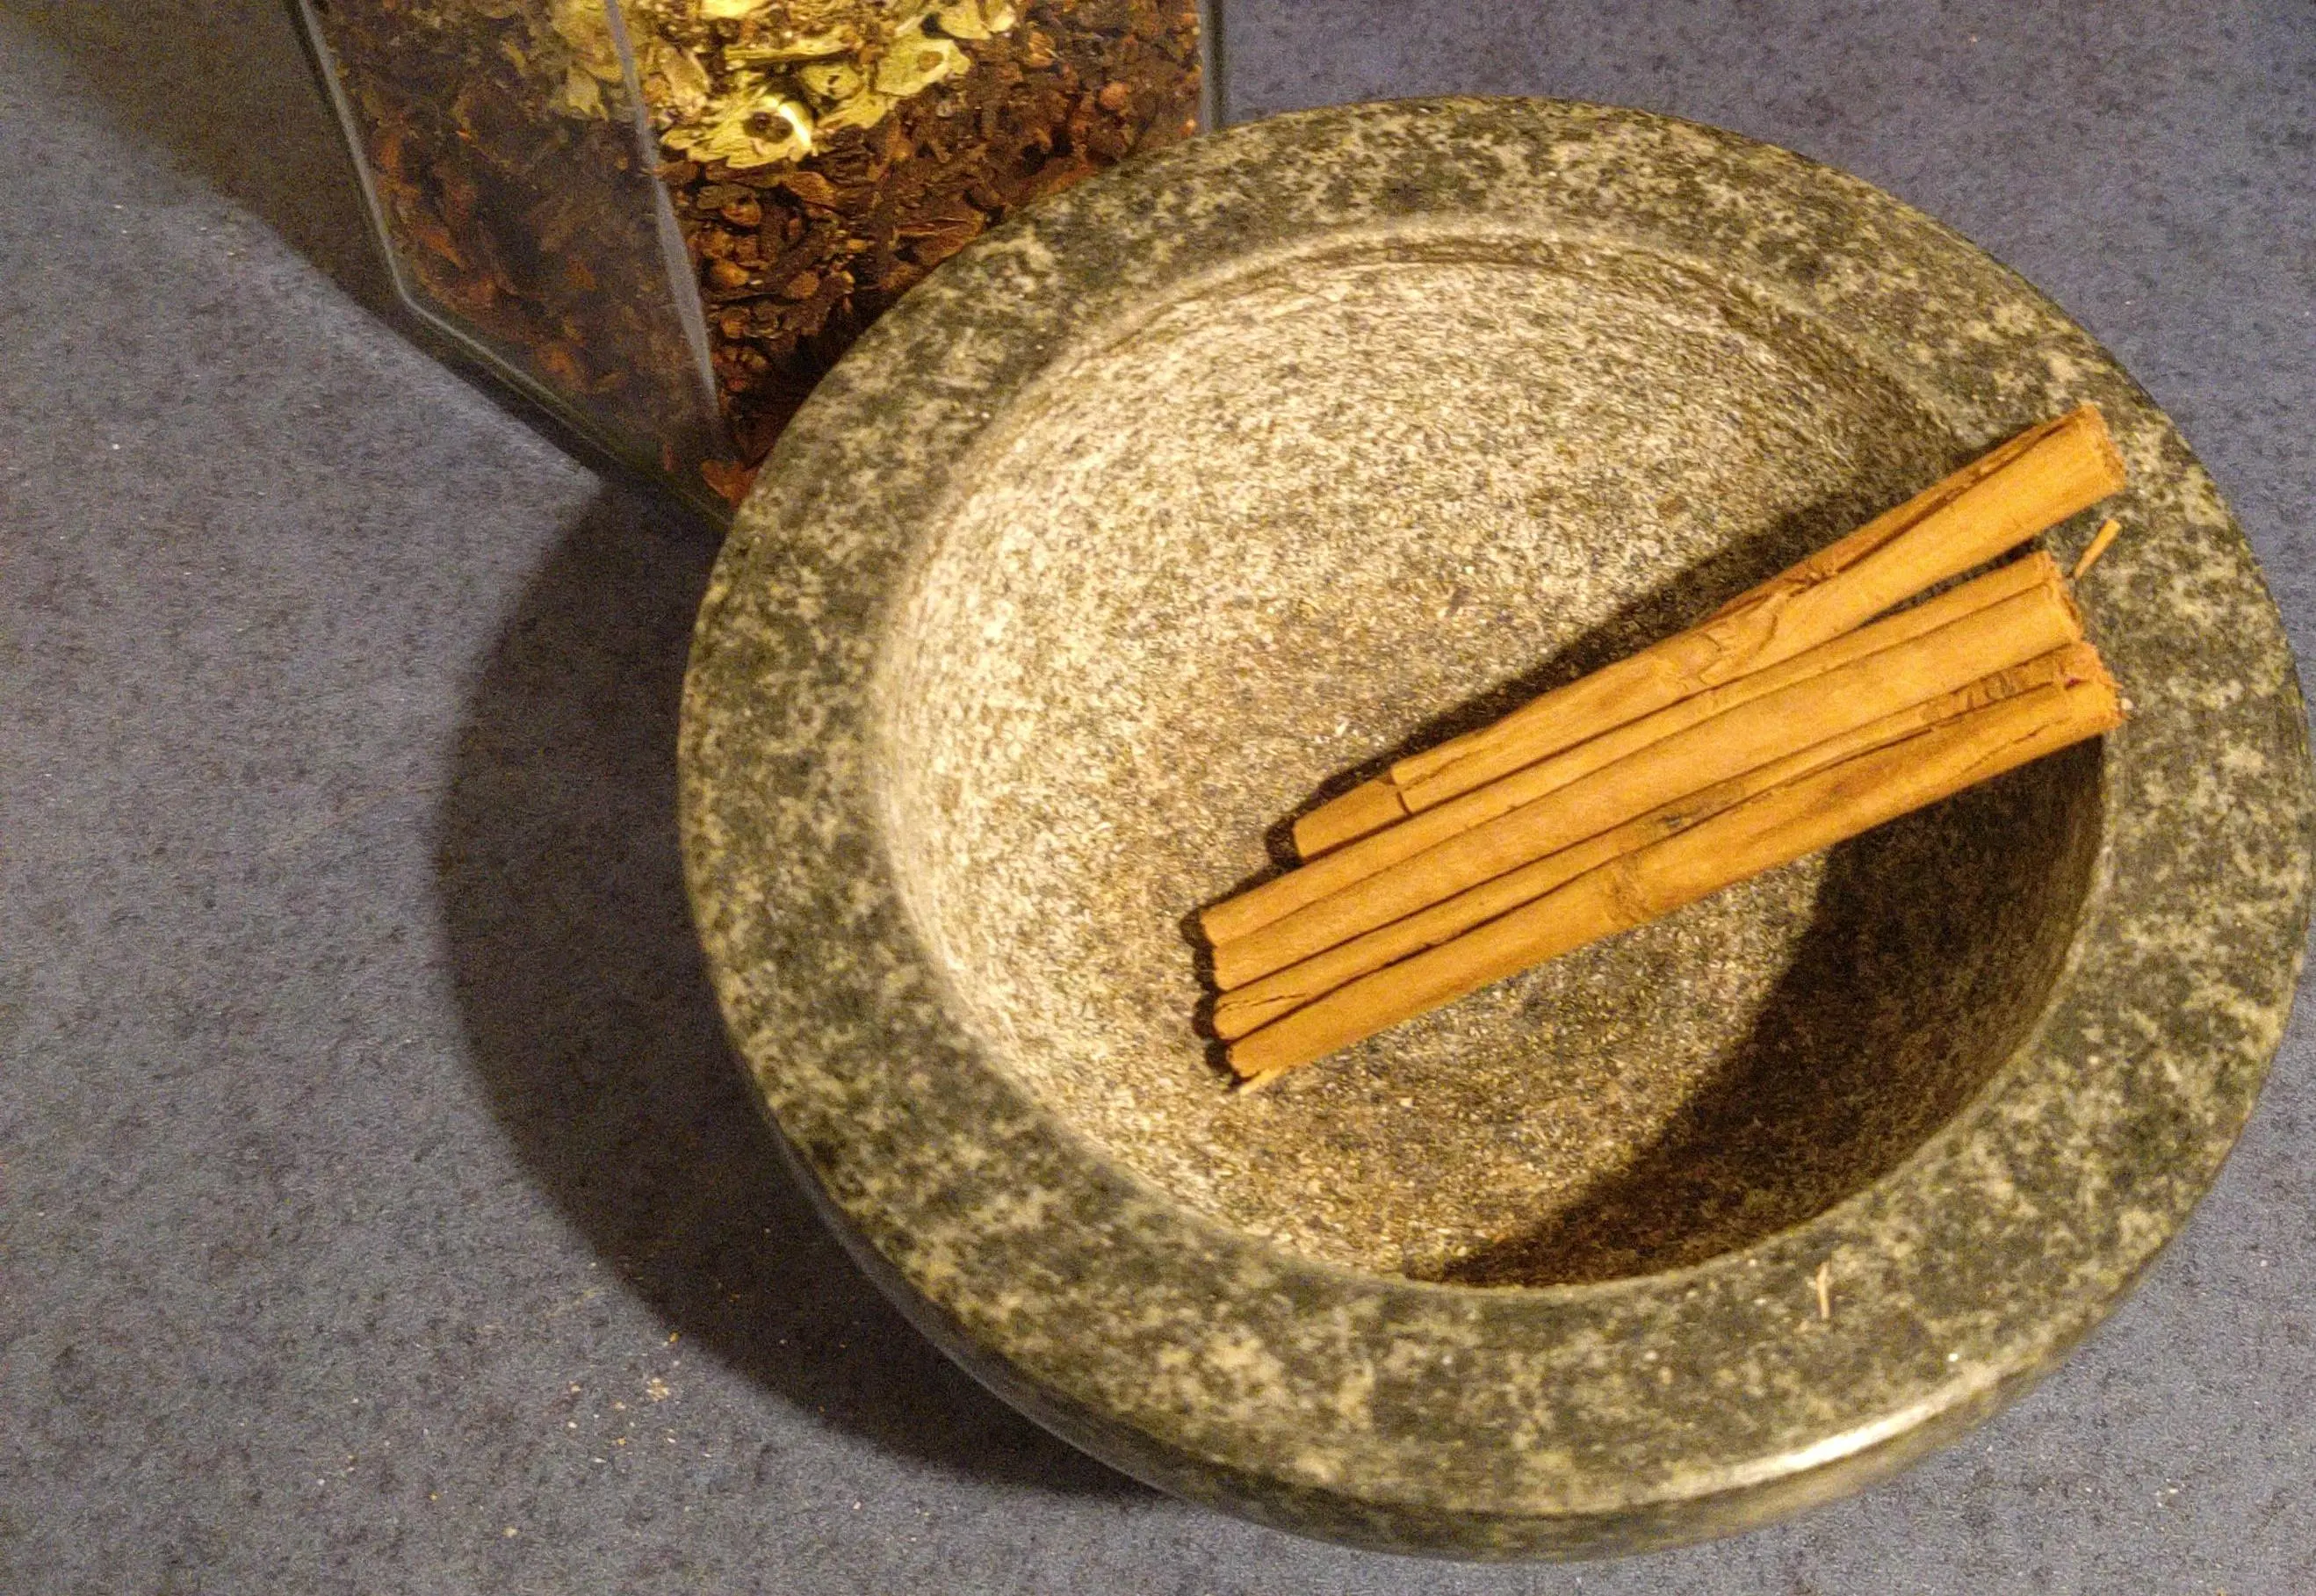 cinnamon sticks in a mortar